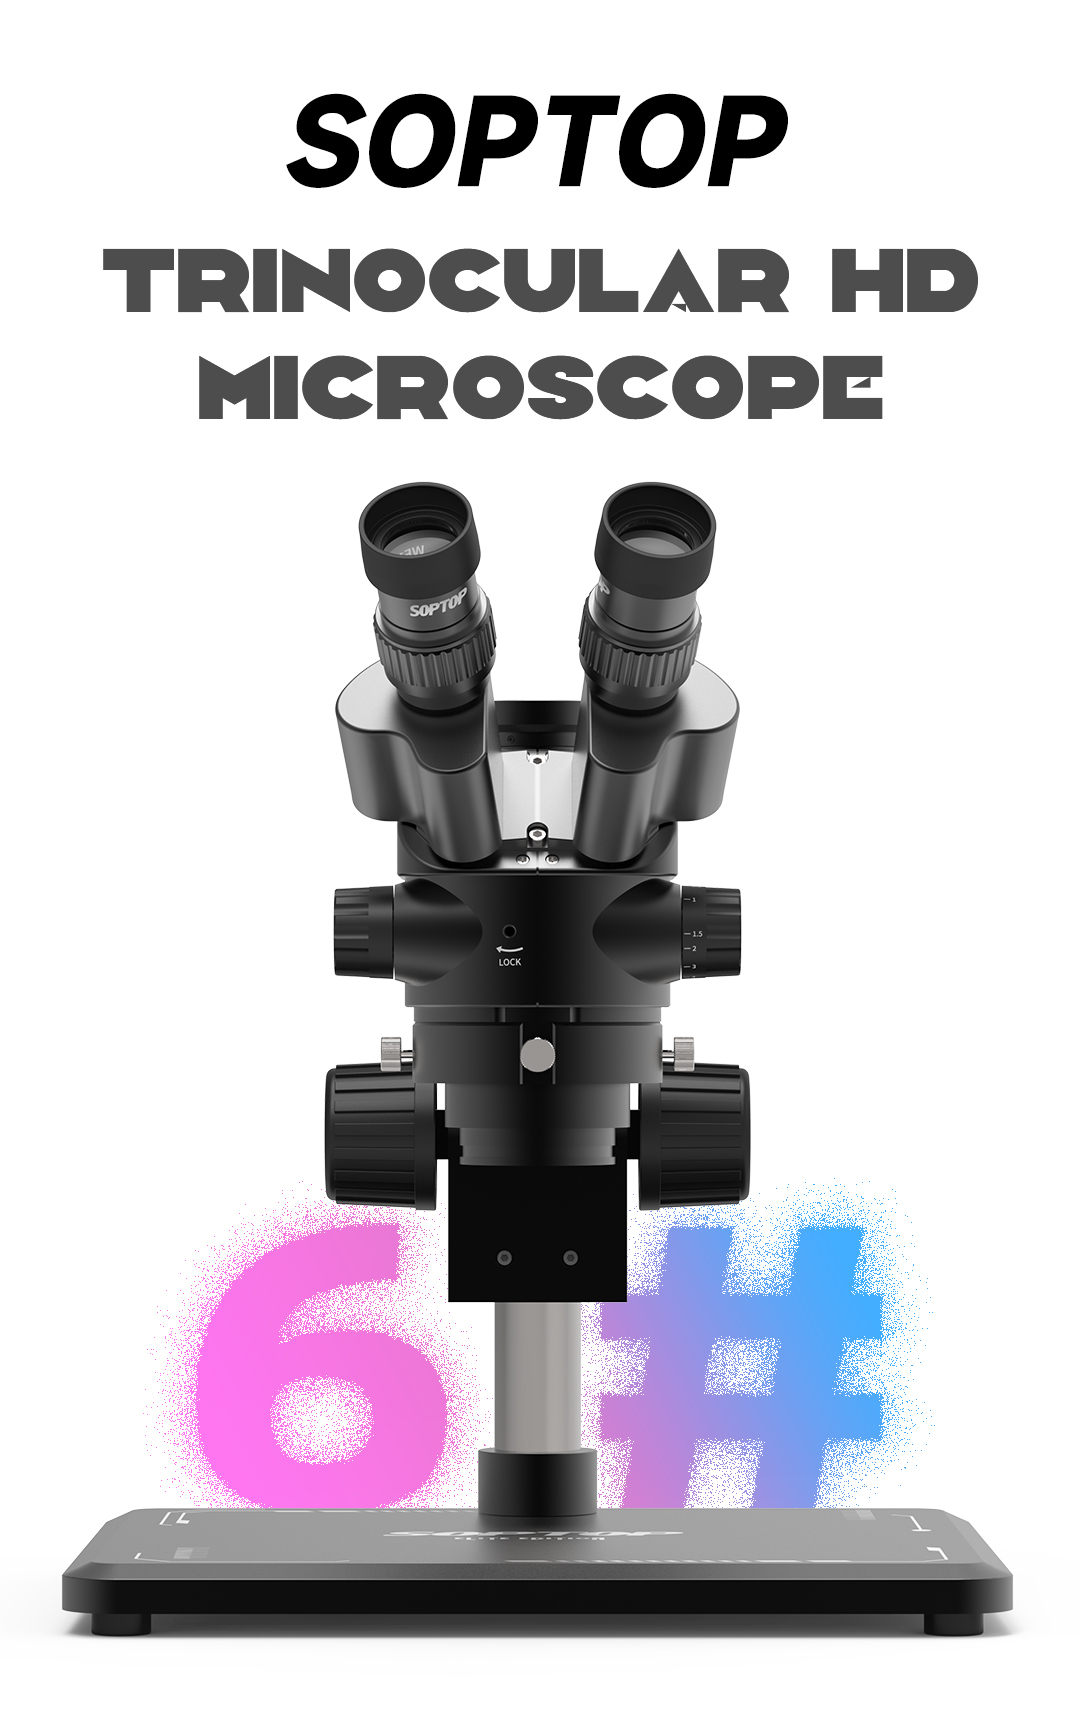 لوپ ۳ چشم (میکروسکوپ) Soptop مدل #6